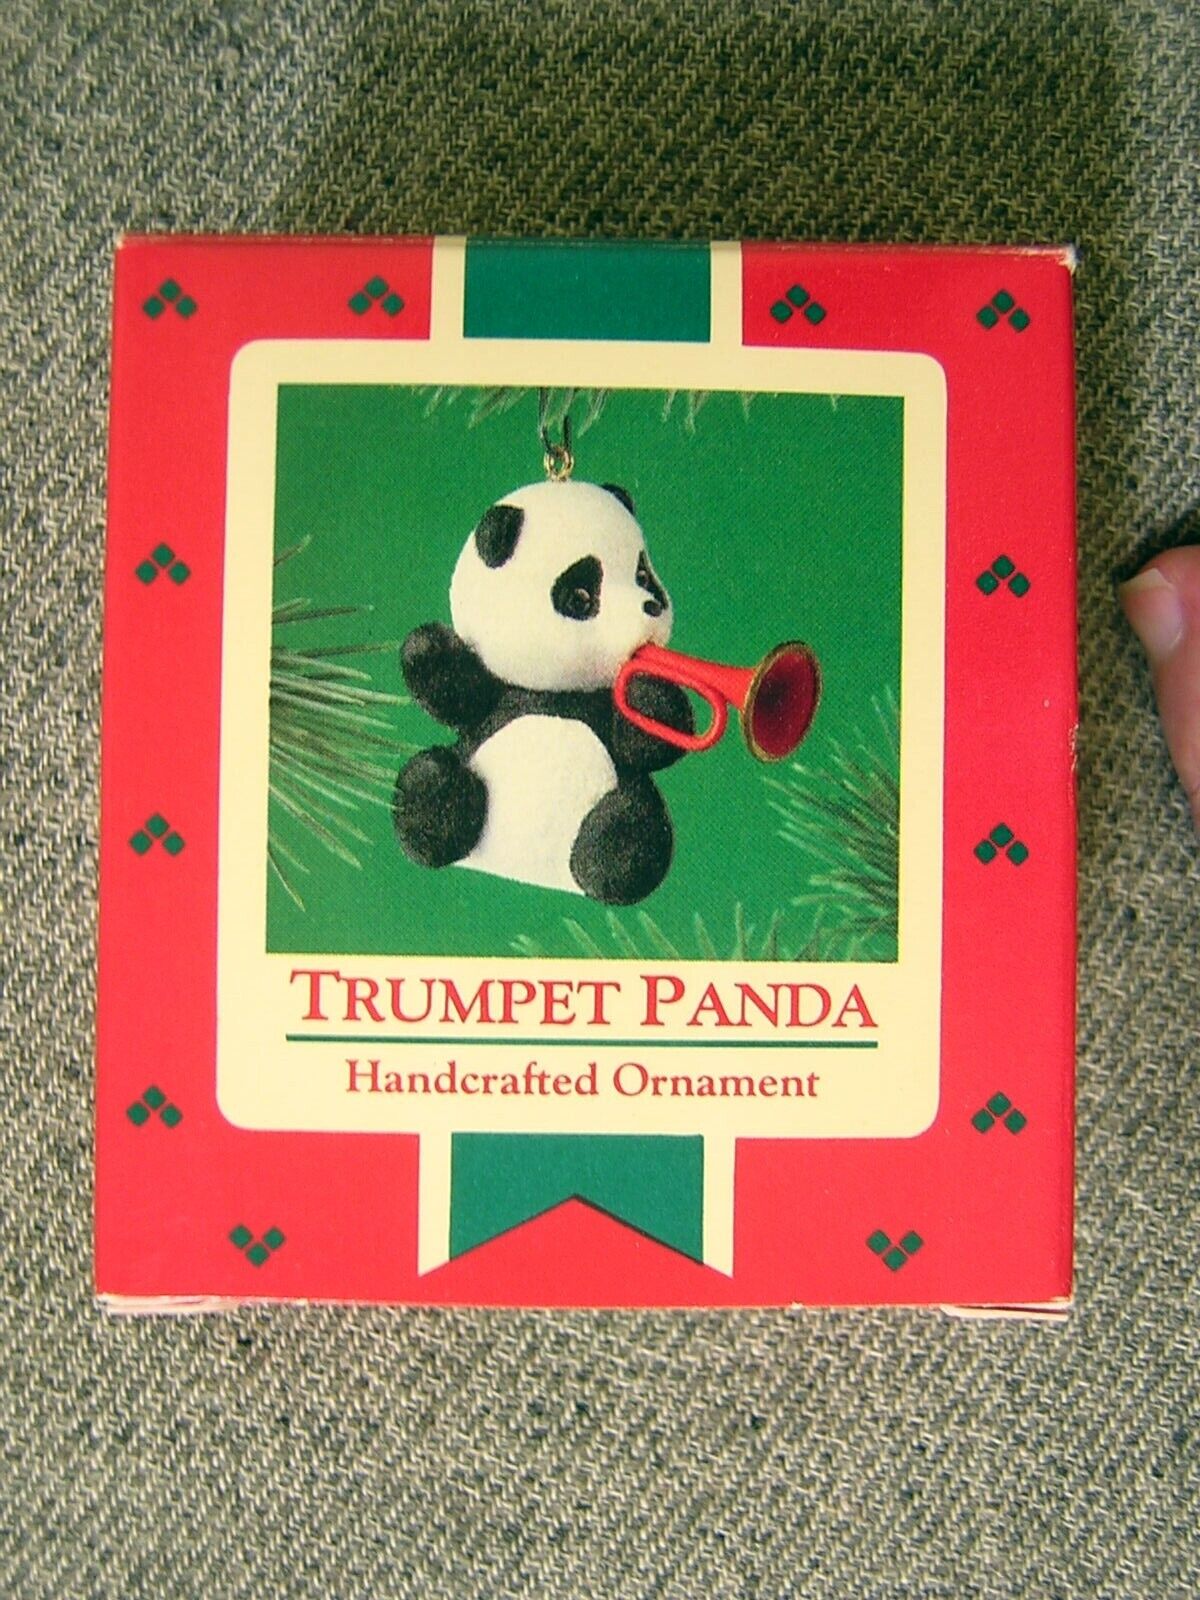 Very Nice 1985 Hallmark “Trumpet Panda” Ornament